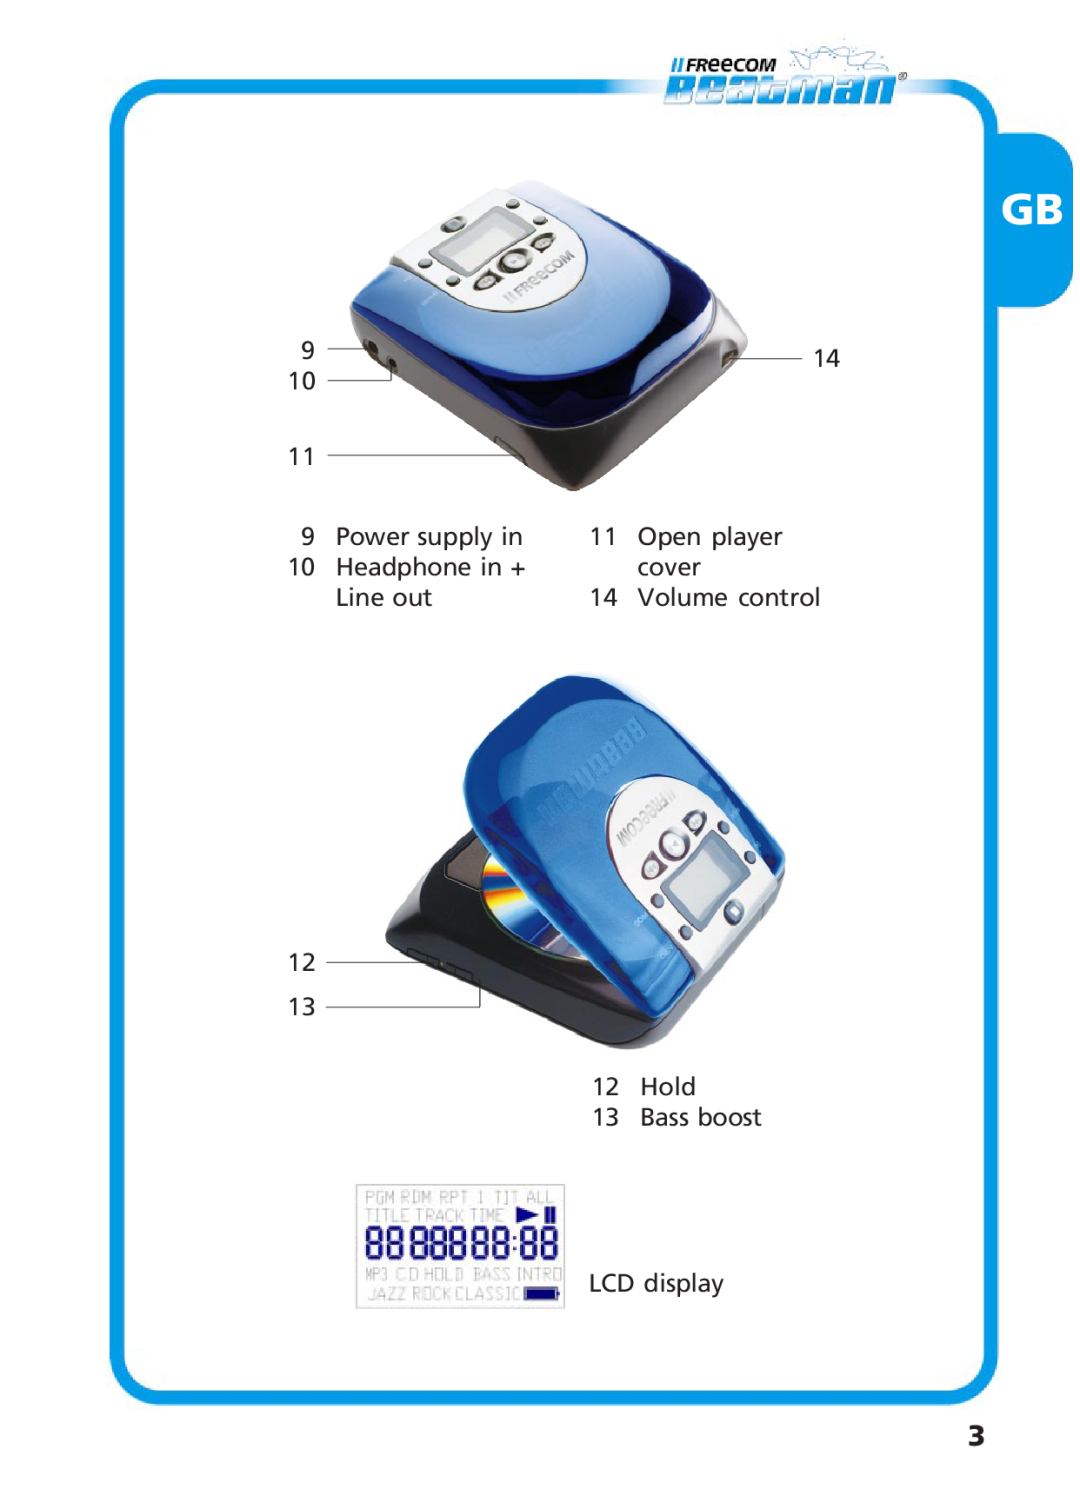 Freecom Technologies Beatman Mini CD I manual Power supply in 